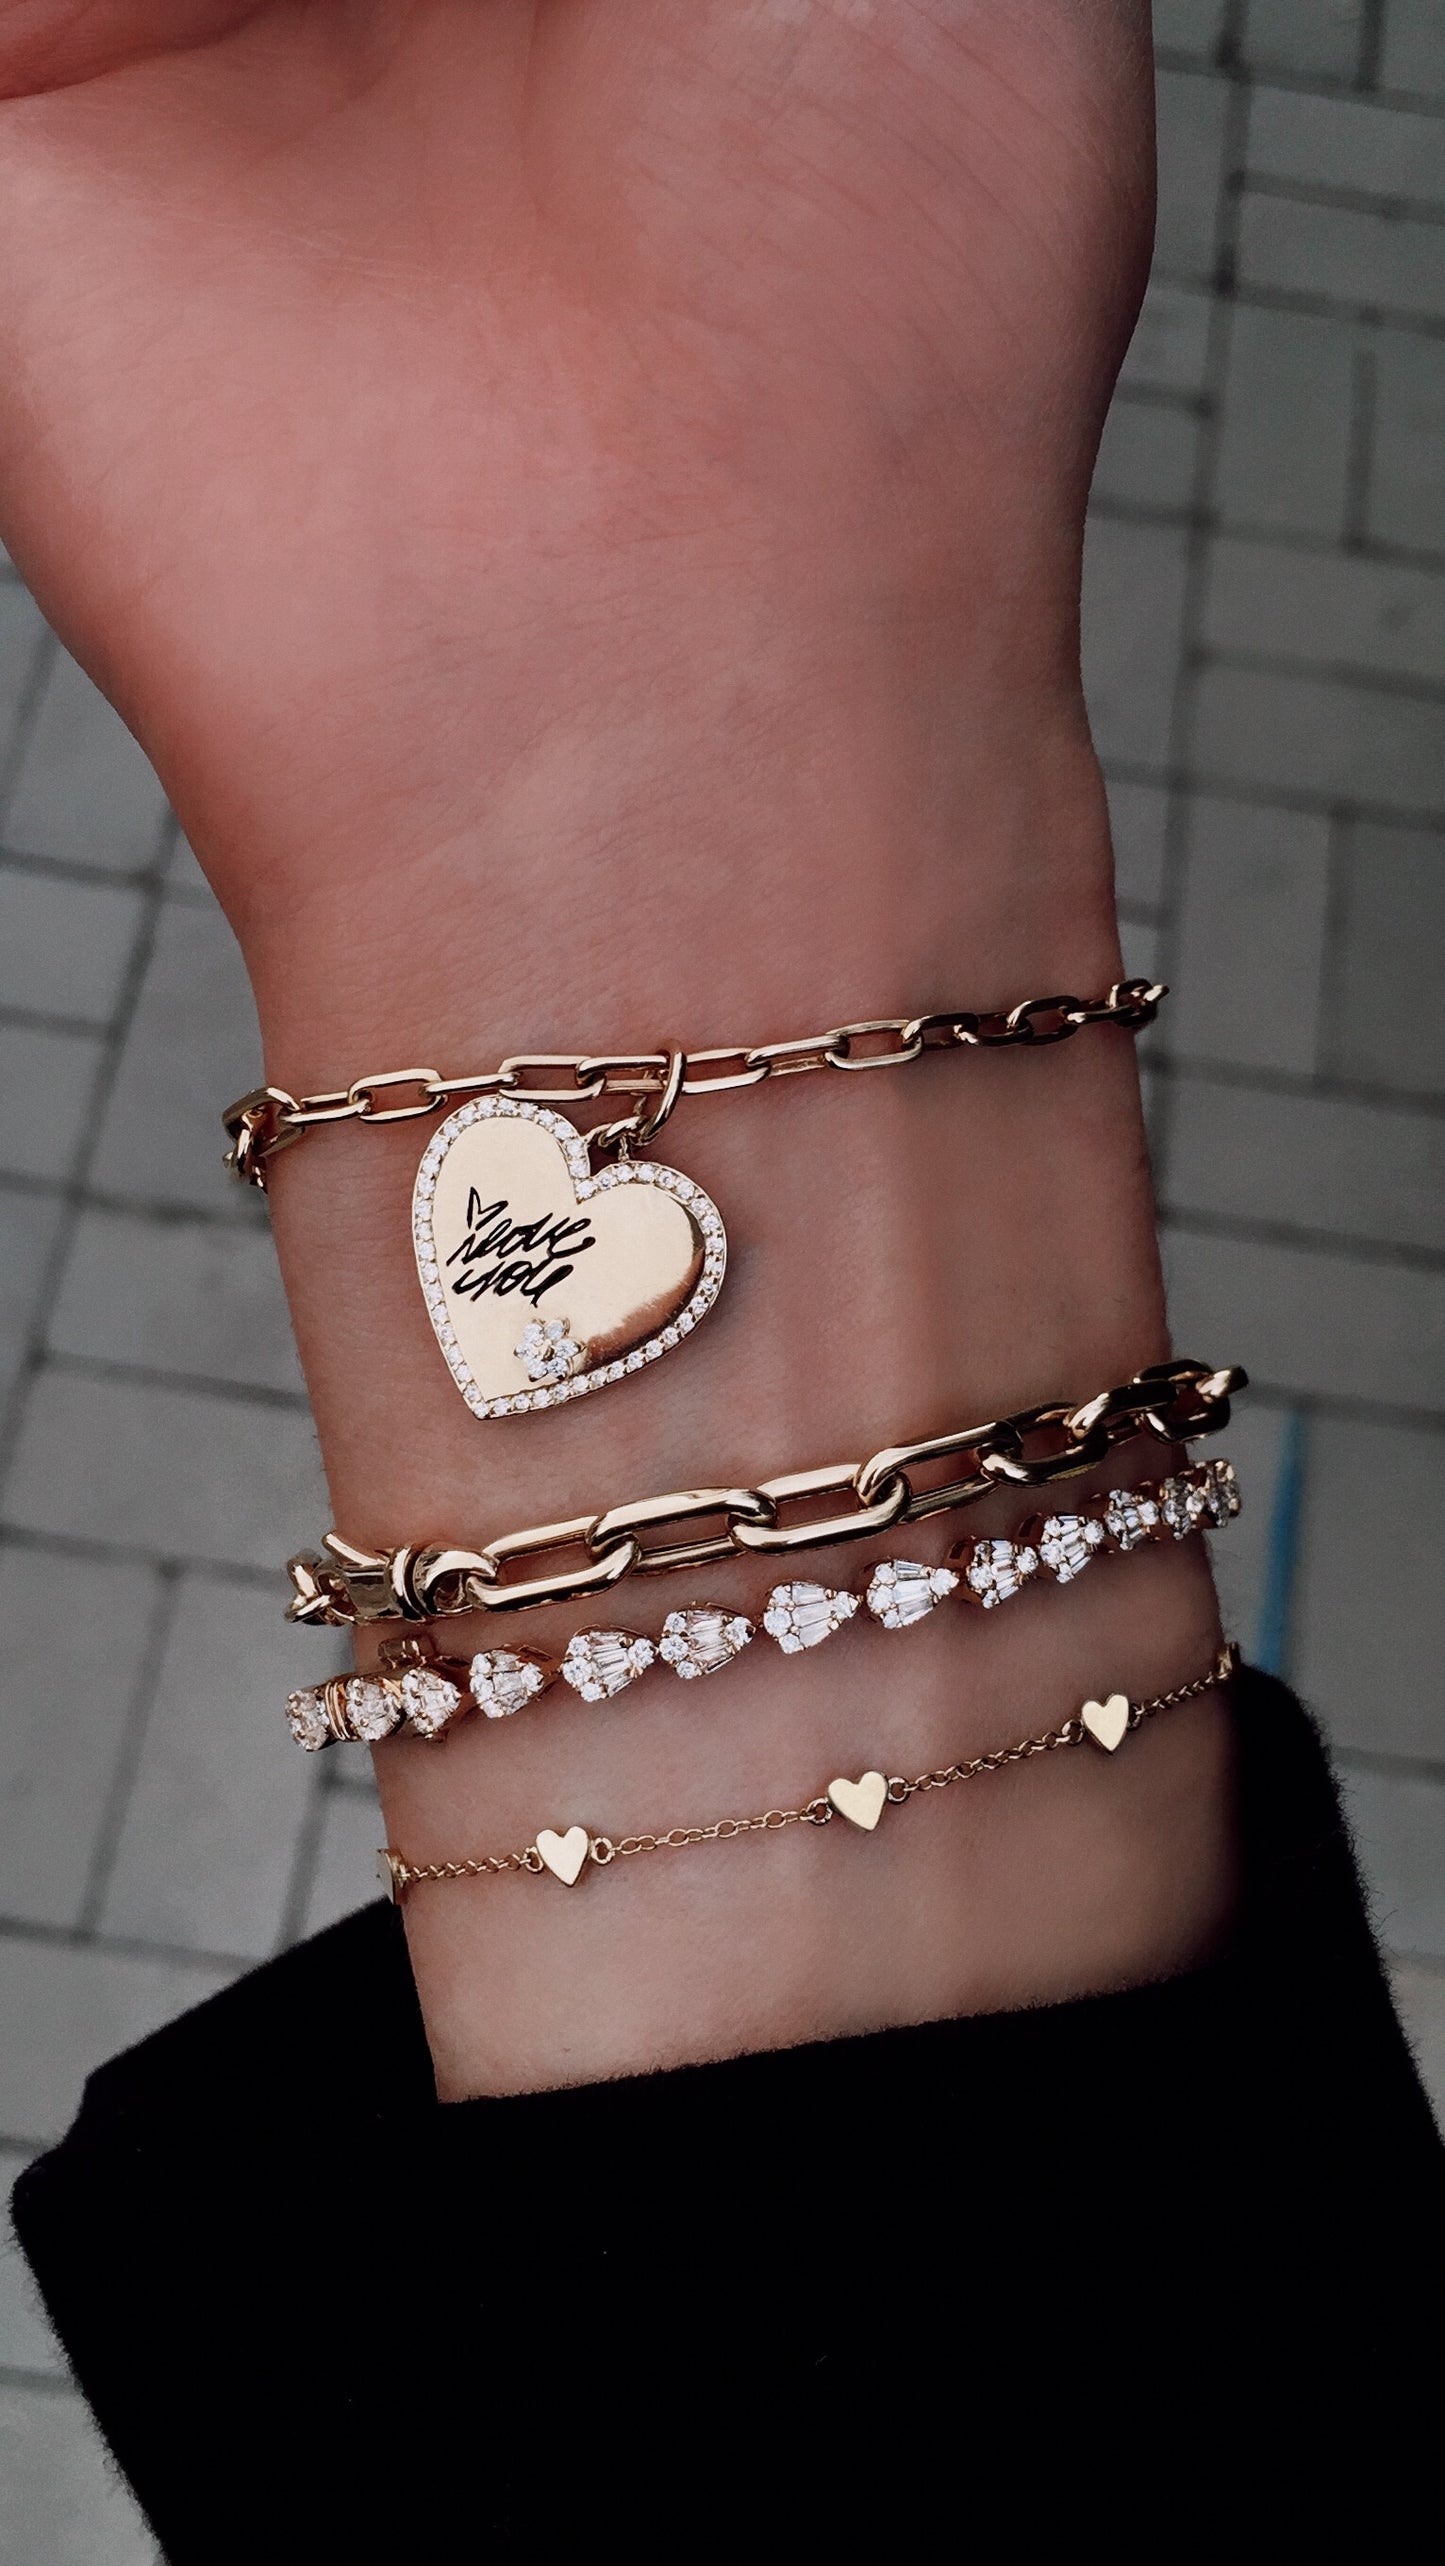 14kt gold thick paperclip chain bracelet - Luna Skye